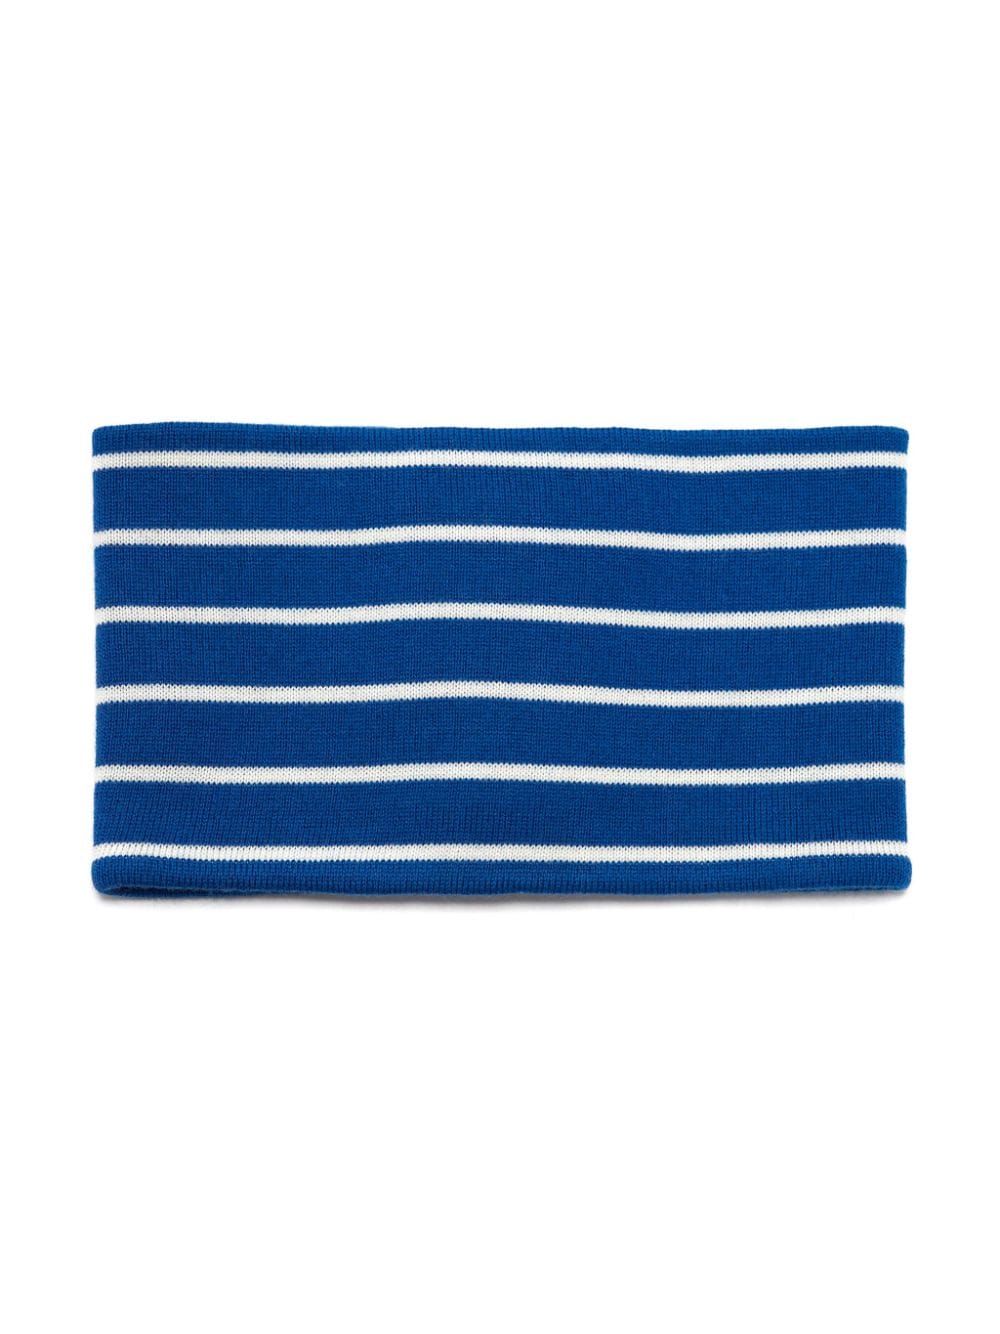 JW Anderson logo-jacquard striped neckband - Blauw